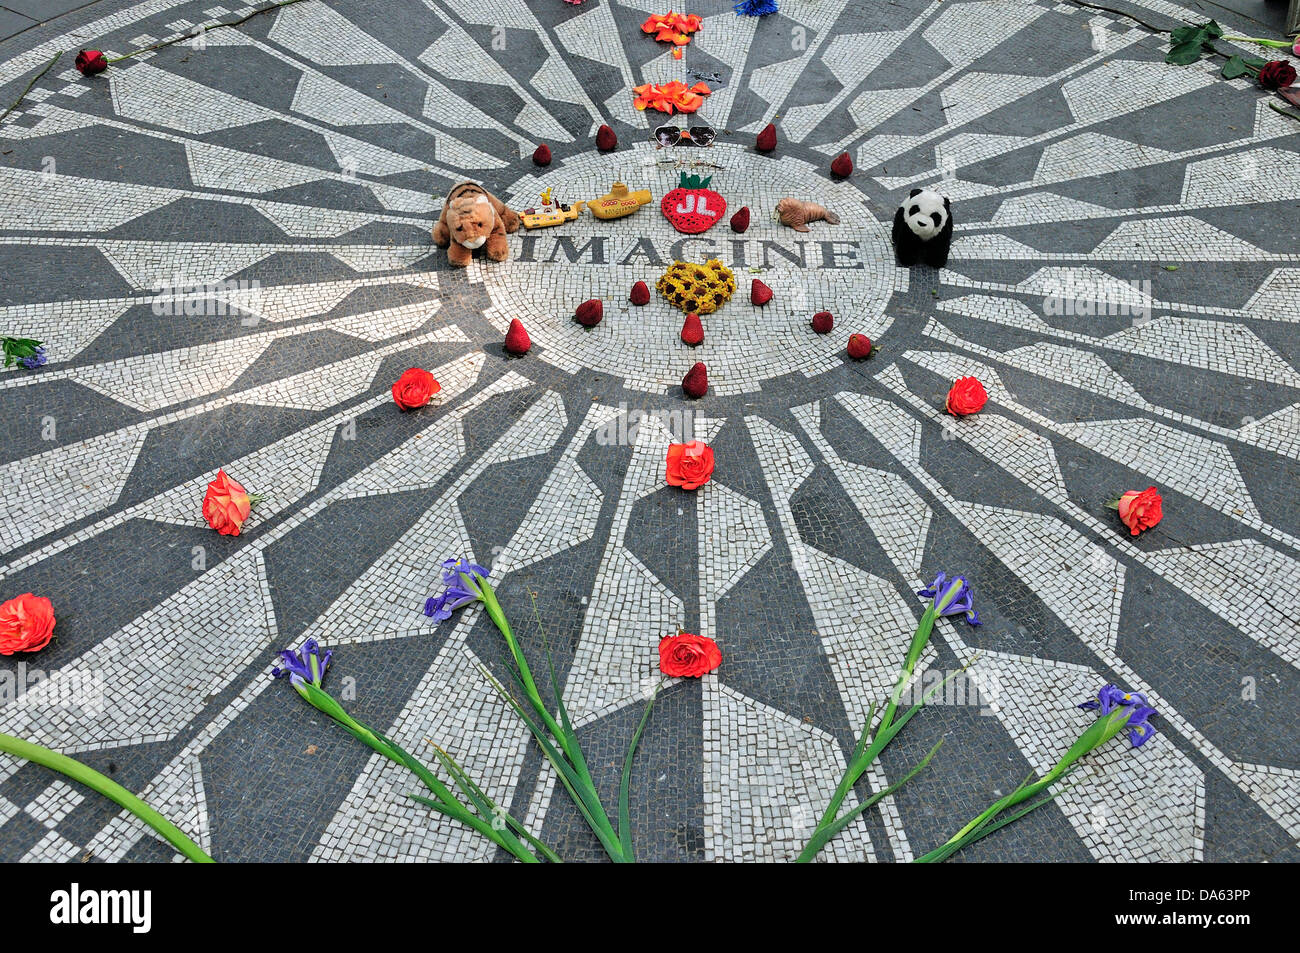 ROCK MUSIC POSTER Imagine John Lennon Memorial Closeup